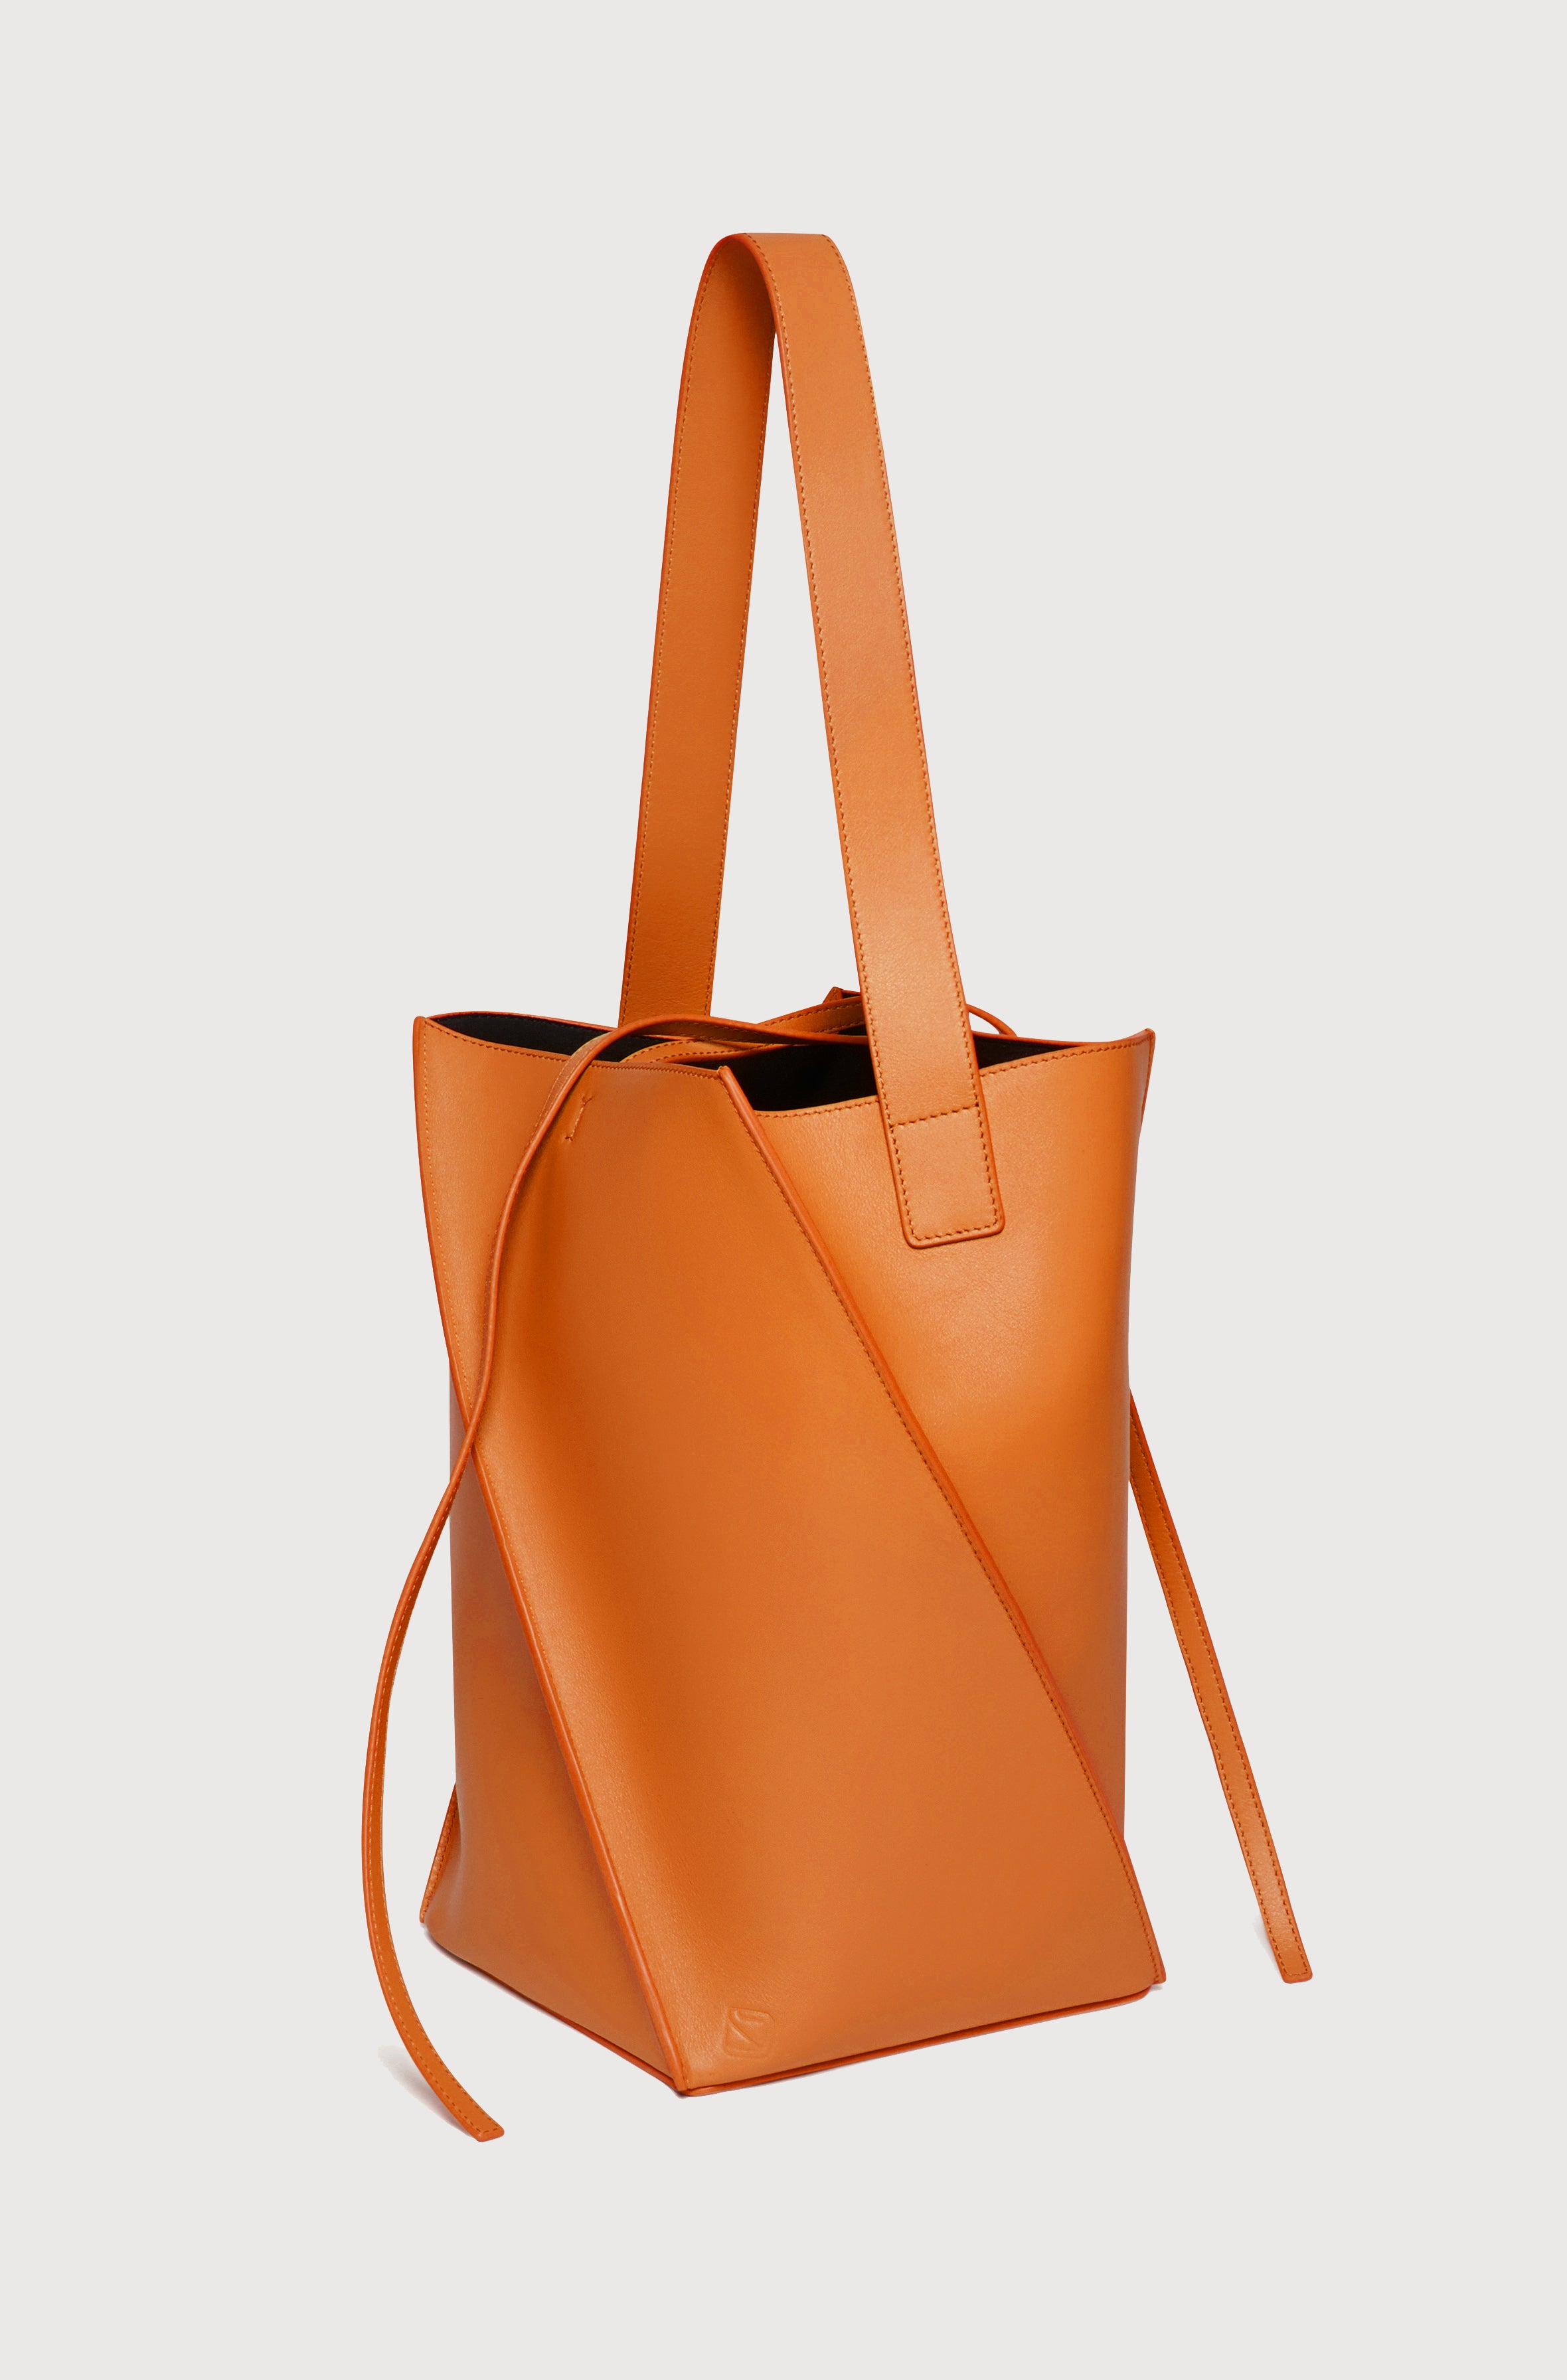 Orange Leather Tote Bag